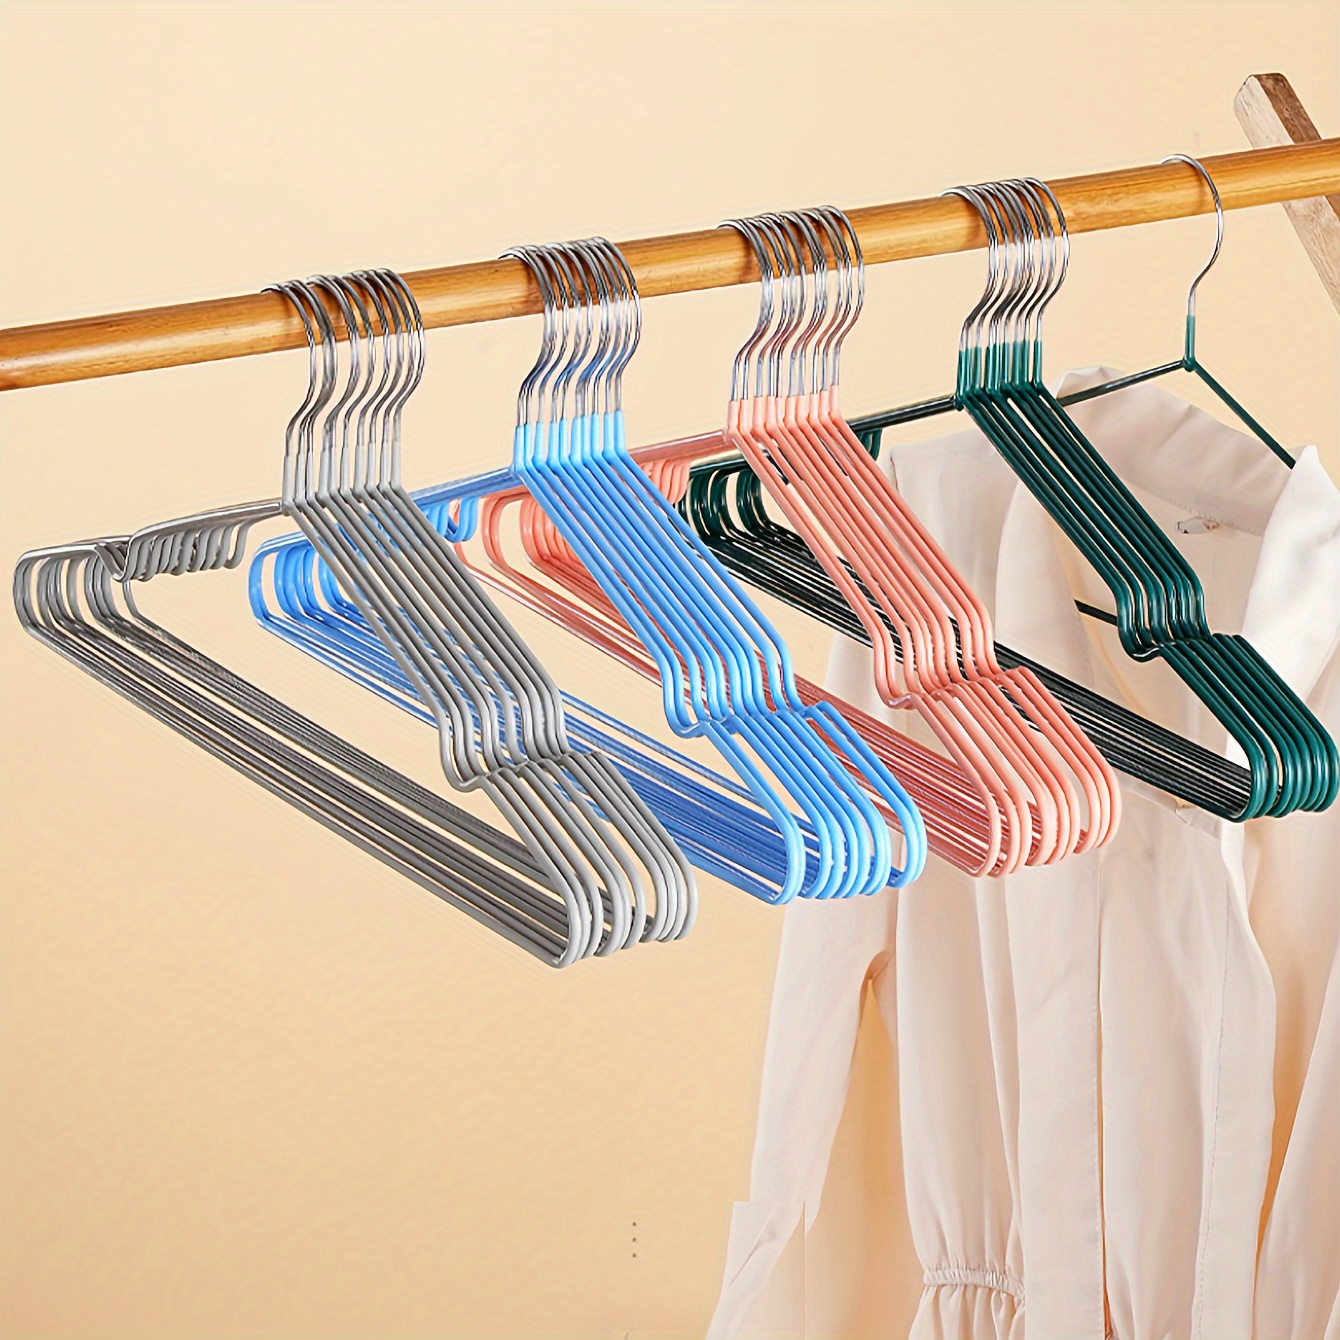 Metal Clothes Hangers, Non-slip Traceless Clothes Racks, Sturdy